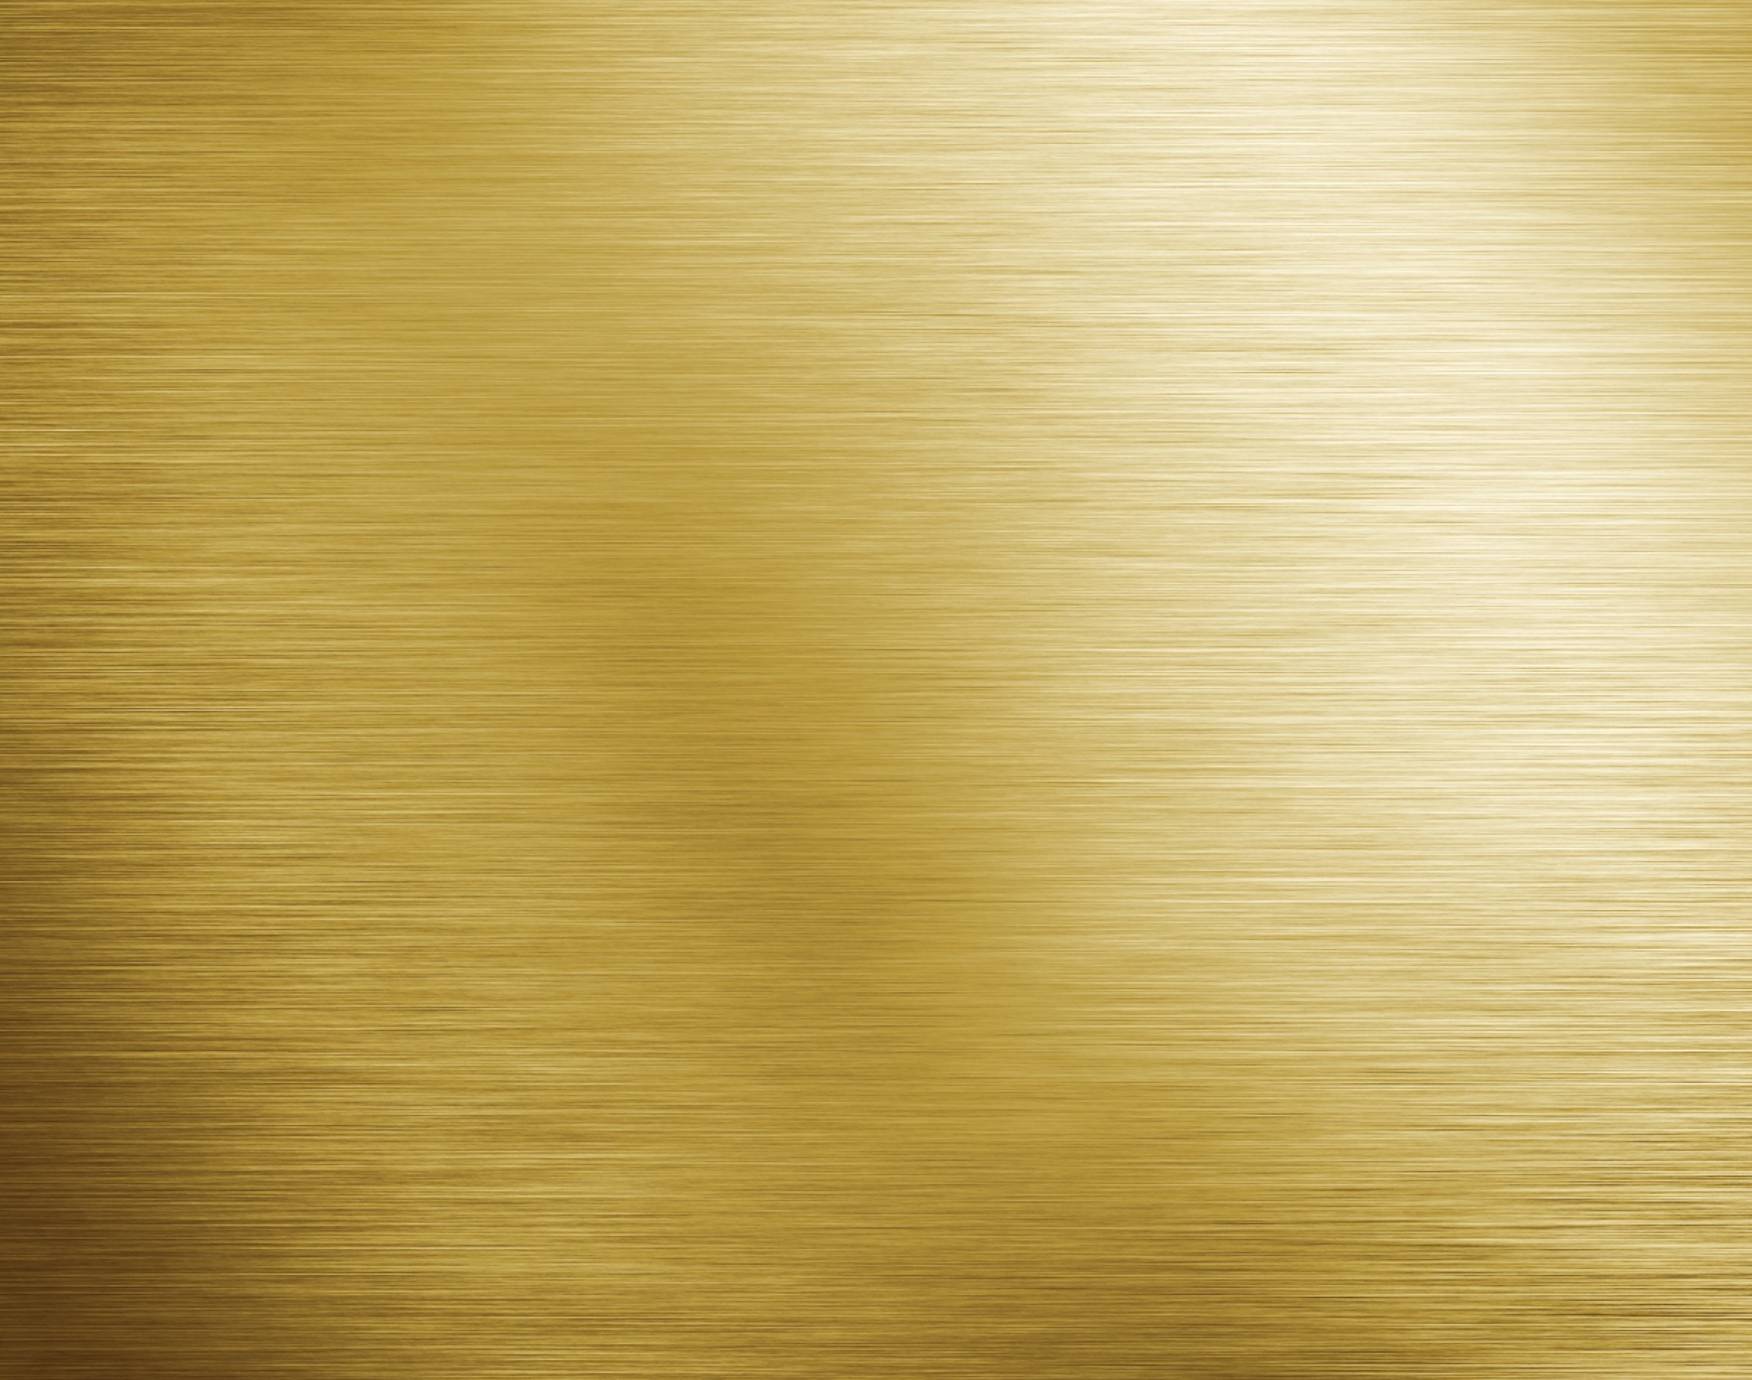 Gold Background HD Wallpaper 14369